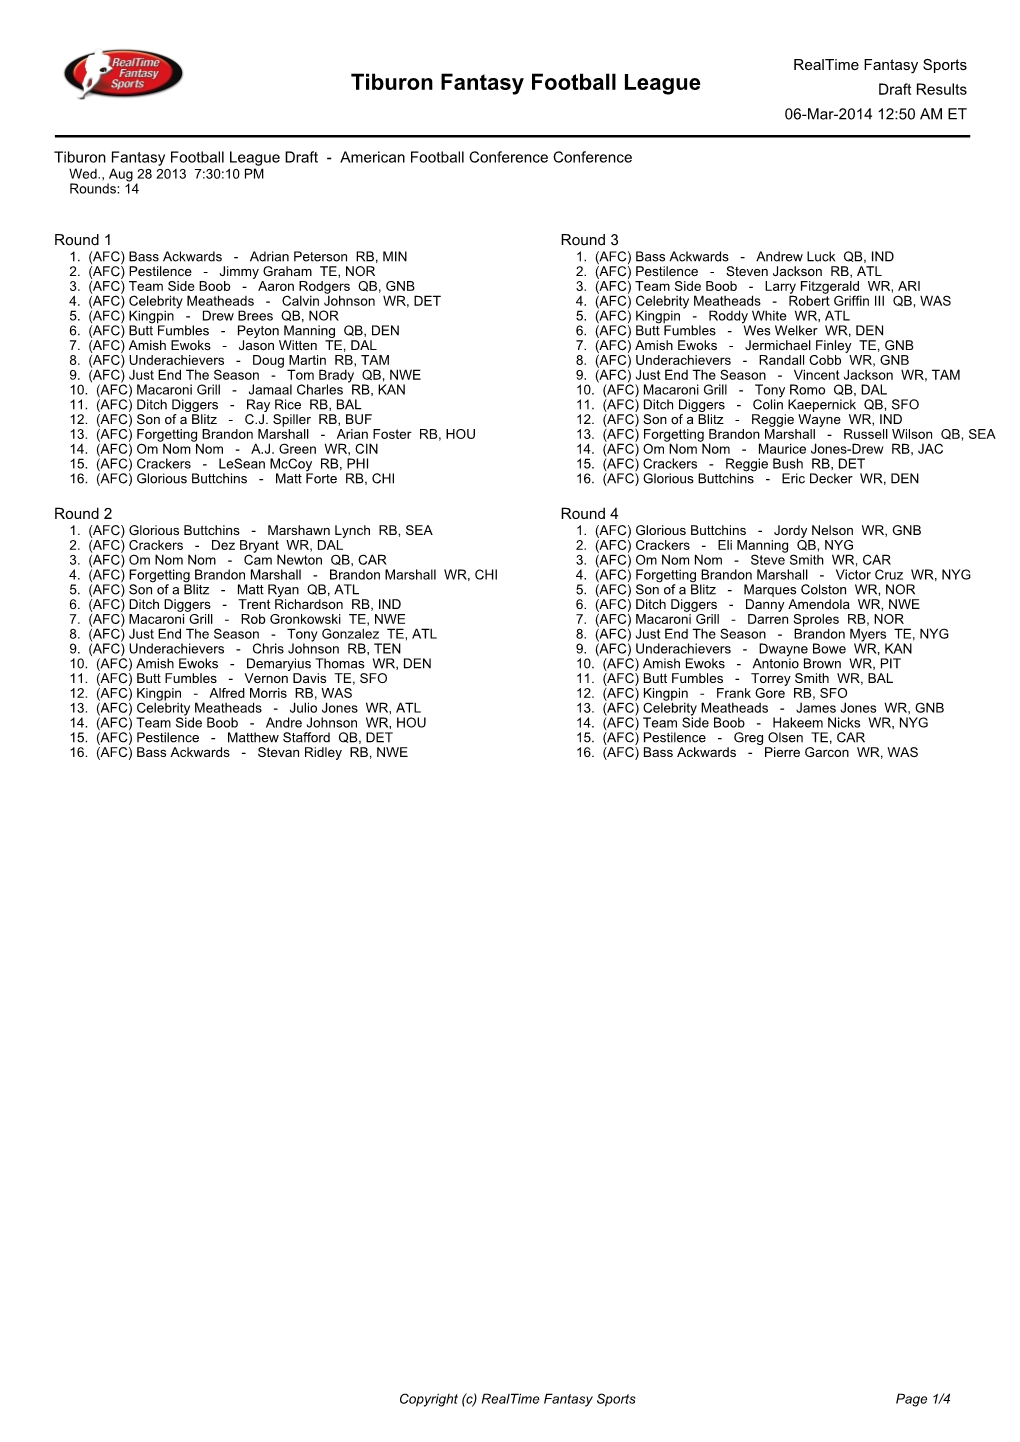 Tiburon Fantasy Football League Draft Results 06-Mar-2014 12:50 AM ET